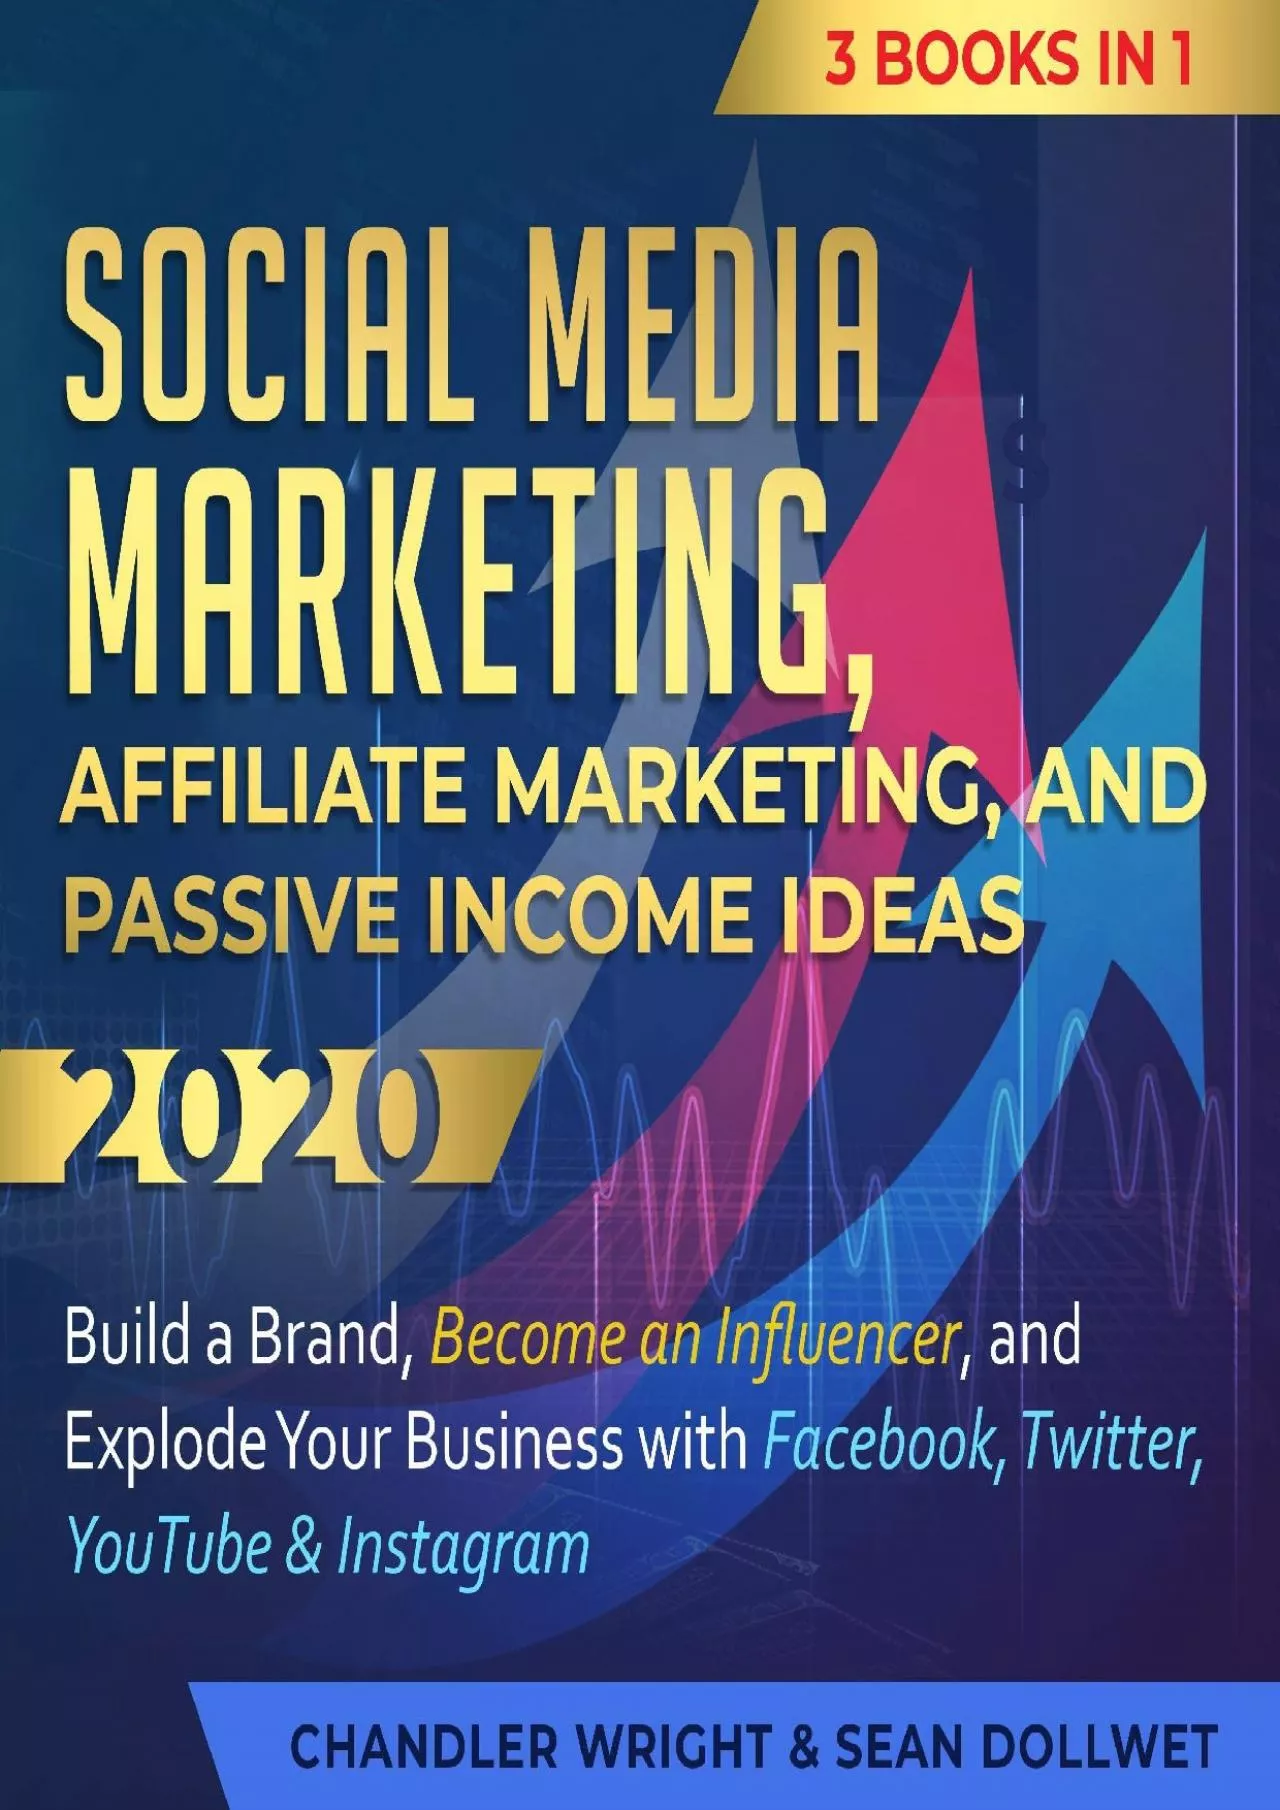 Social Media Marketing Affiliate Marketing, and Passive Income Ideas 2020 3 Books in 1